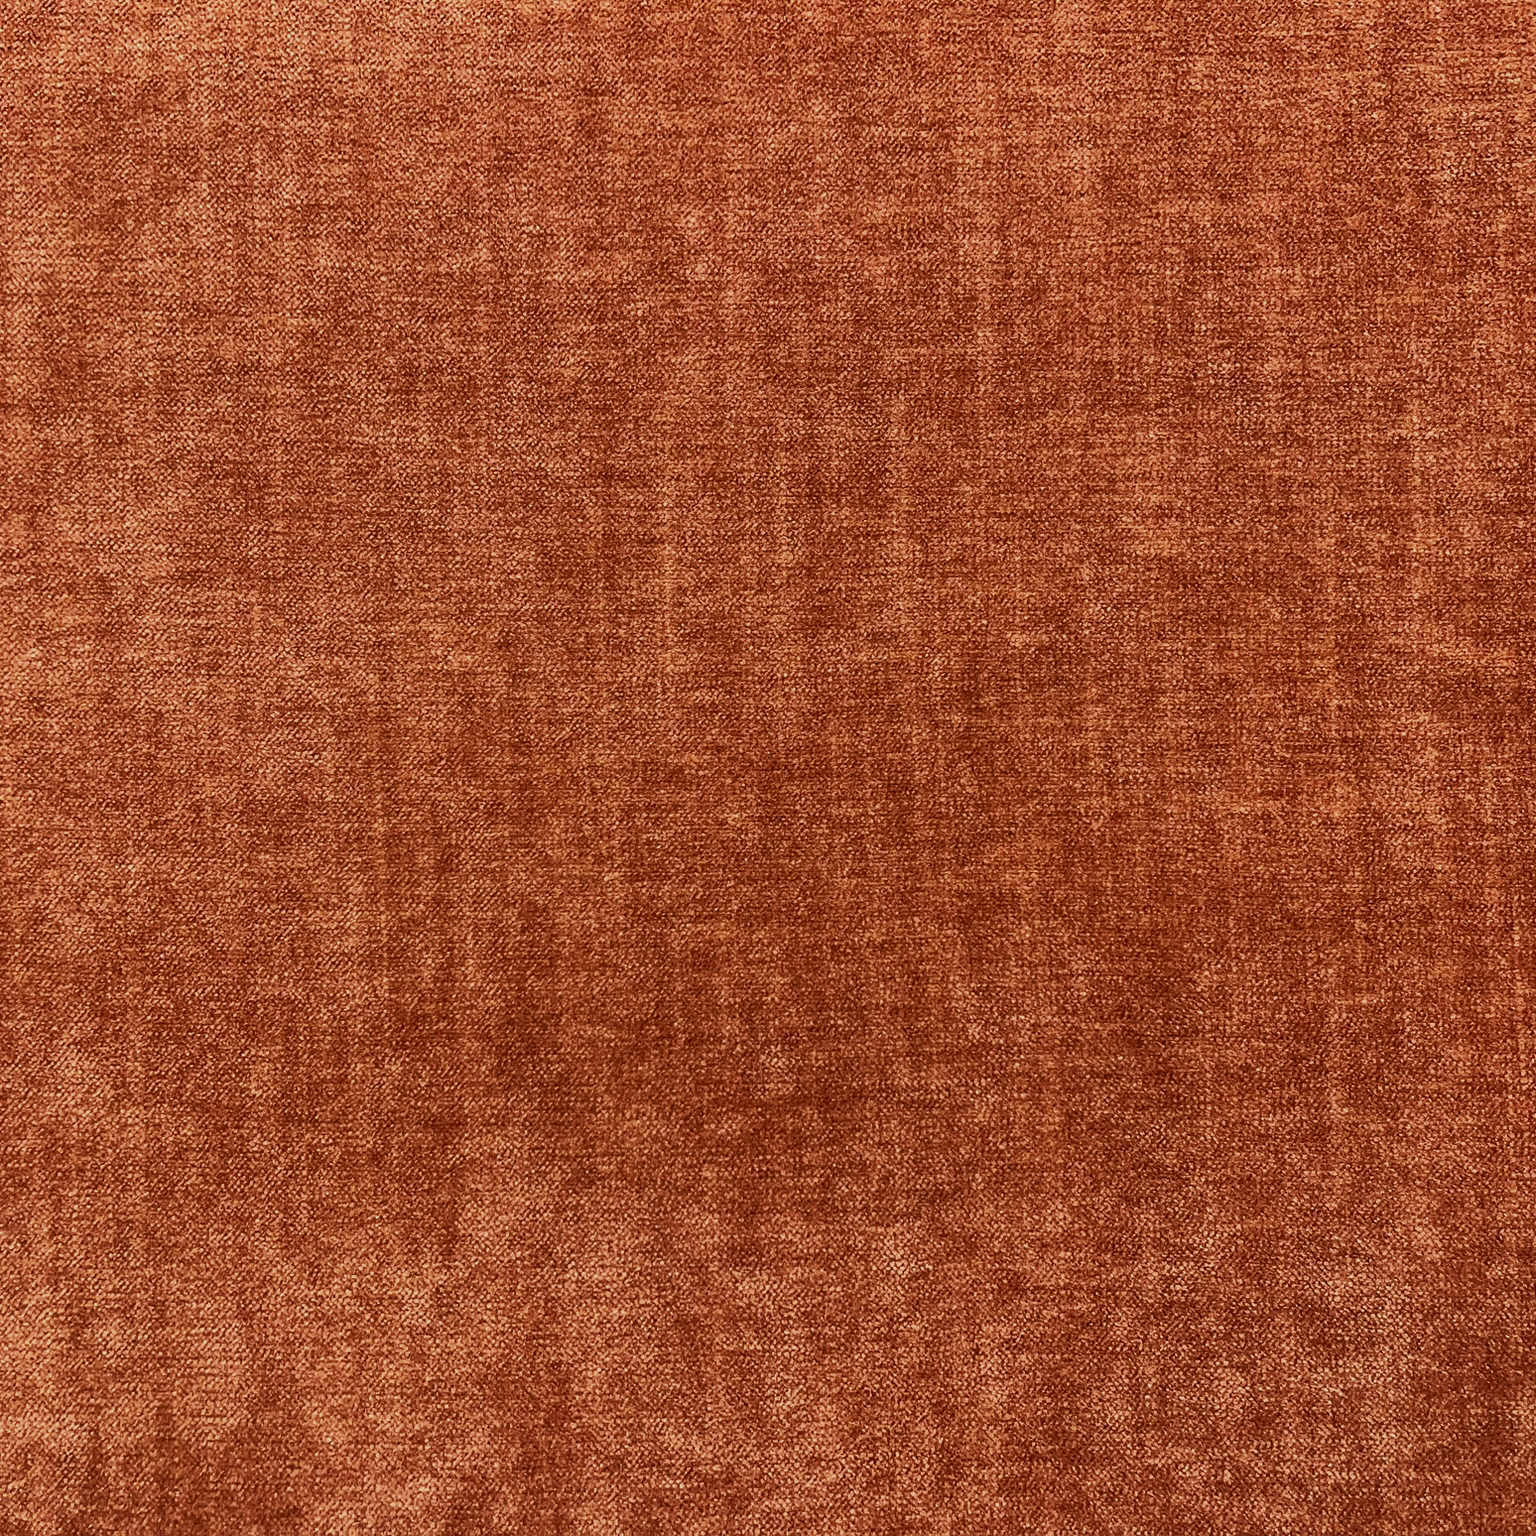 Adrano Fabric Samples - Rydan Interiors